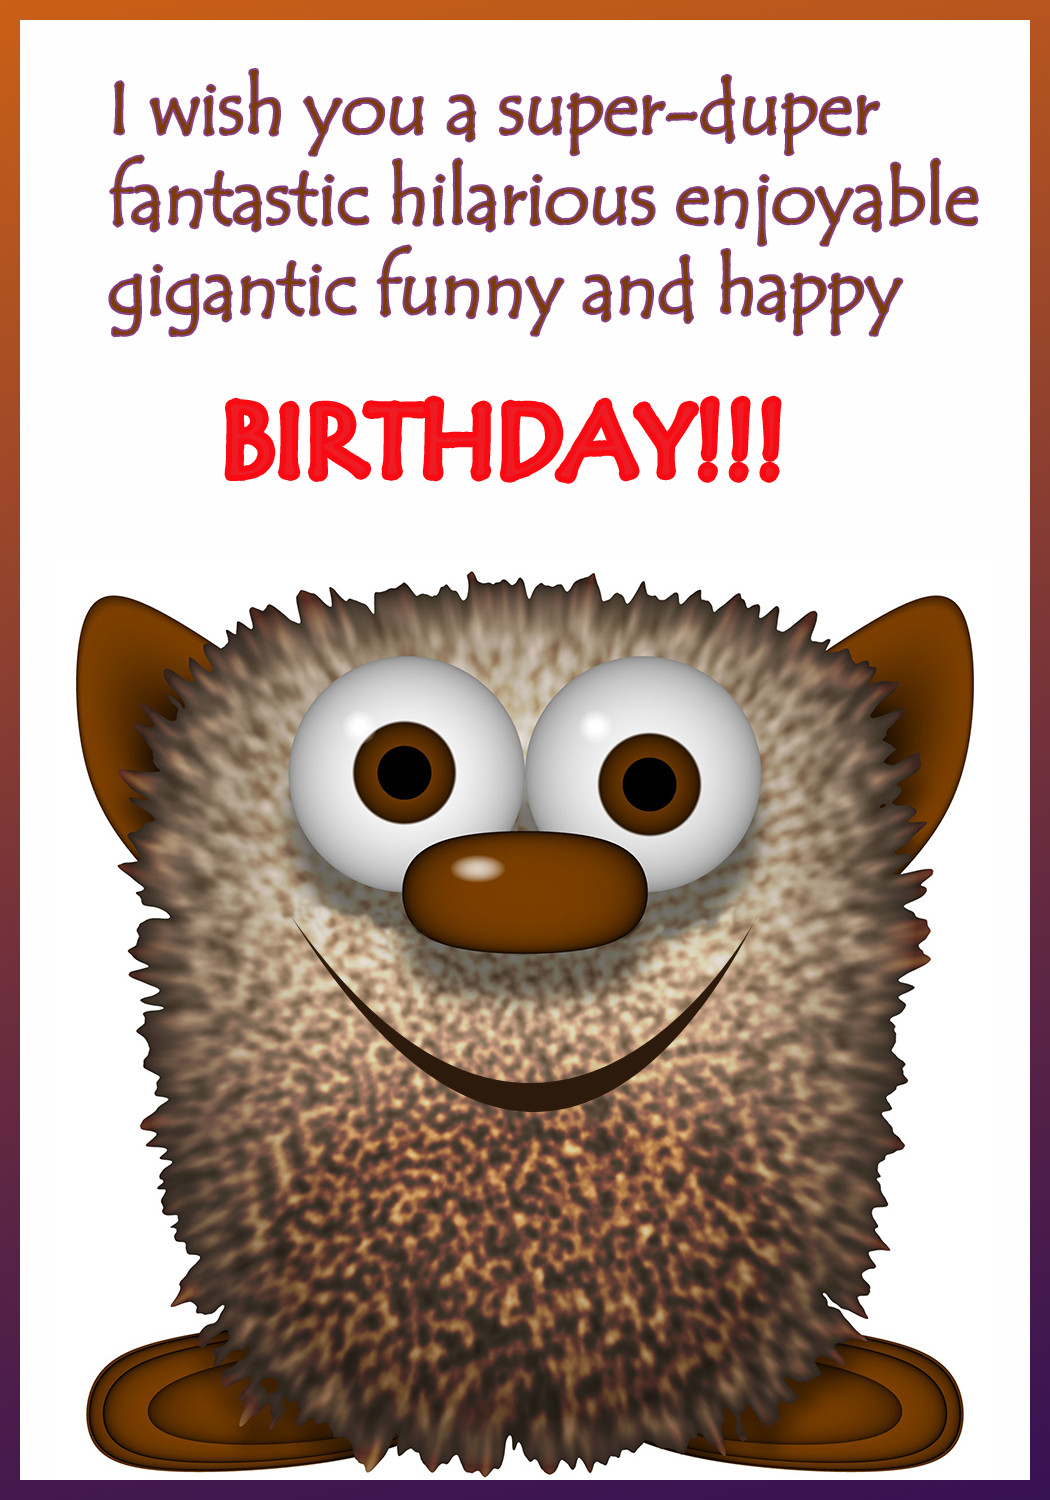 Funny Birthday Greeting Cards
 Funny Printable Birthday Cards